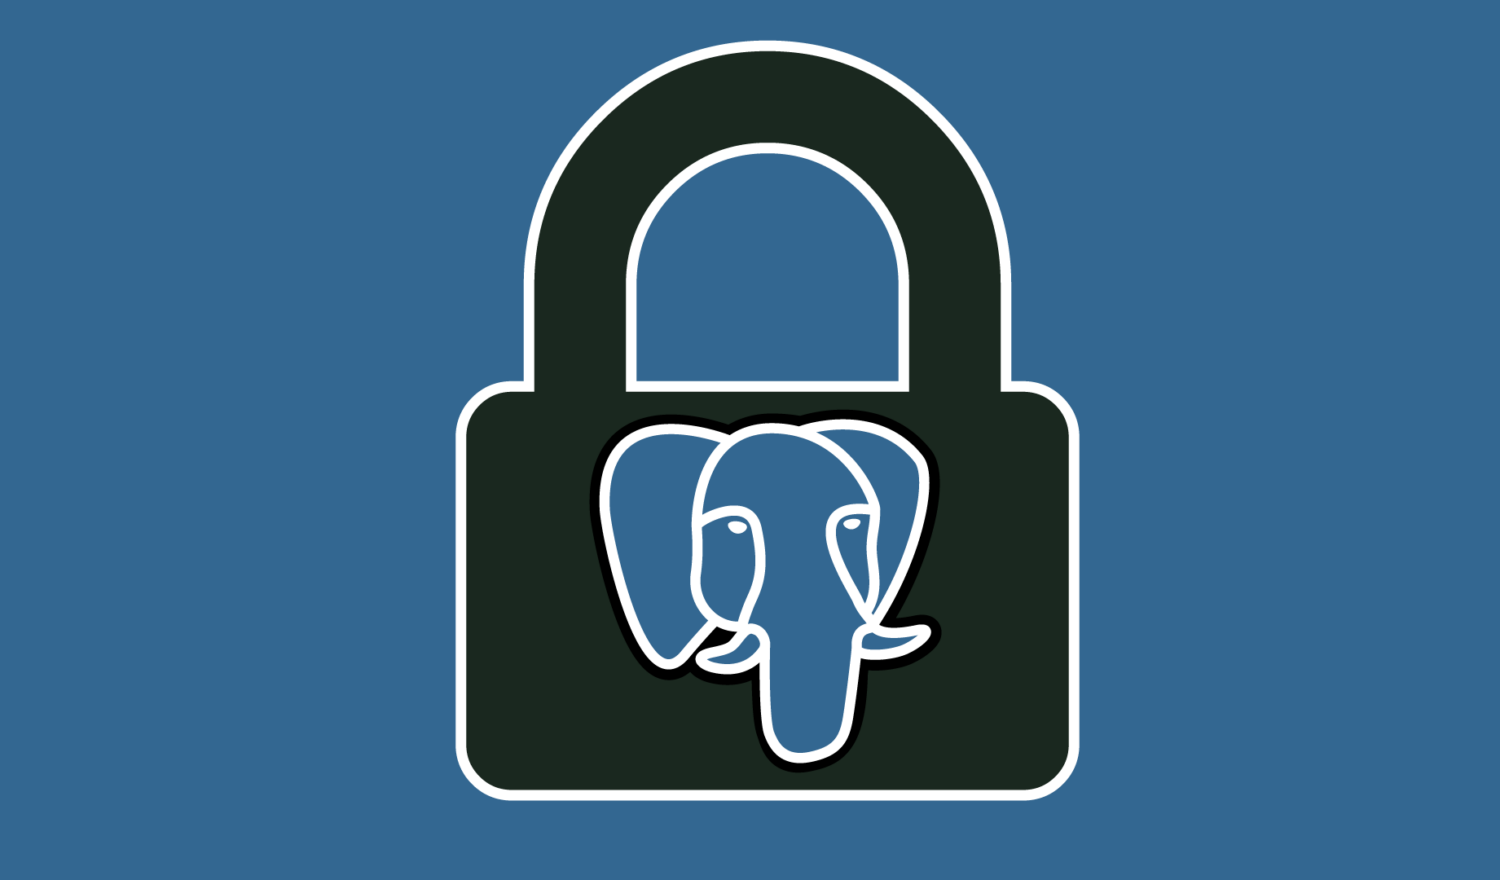 the postgres elephant logo on a padlock